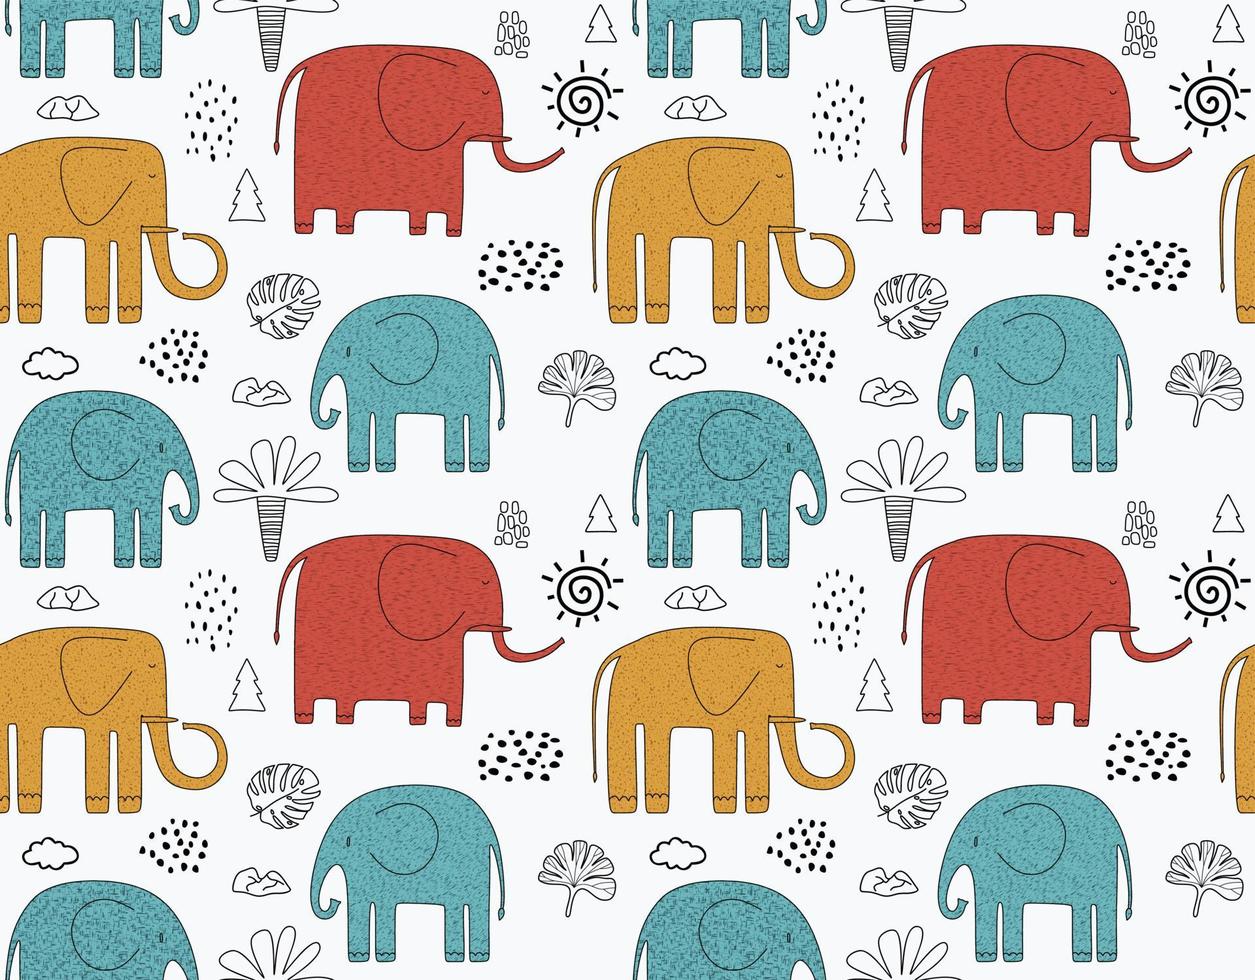 Cute elephants seamless pattern. vector illustration